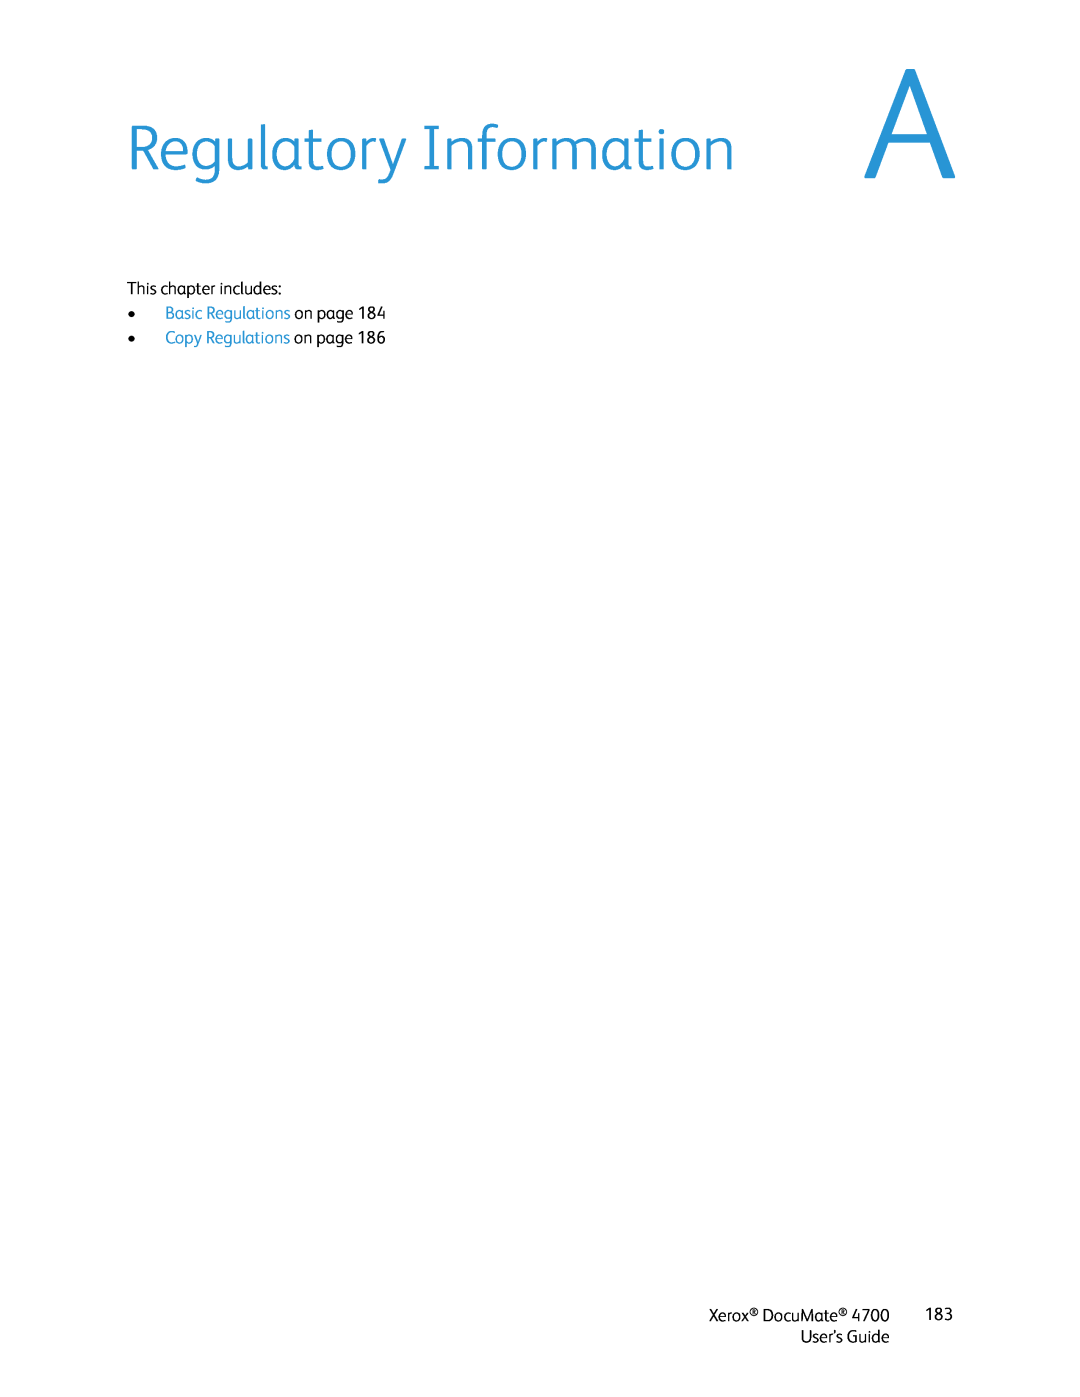 Xerox 4700 manual Regulatory Information, Basic Regulations on page Copy Regulations on page 